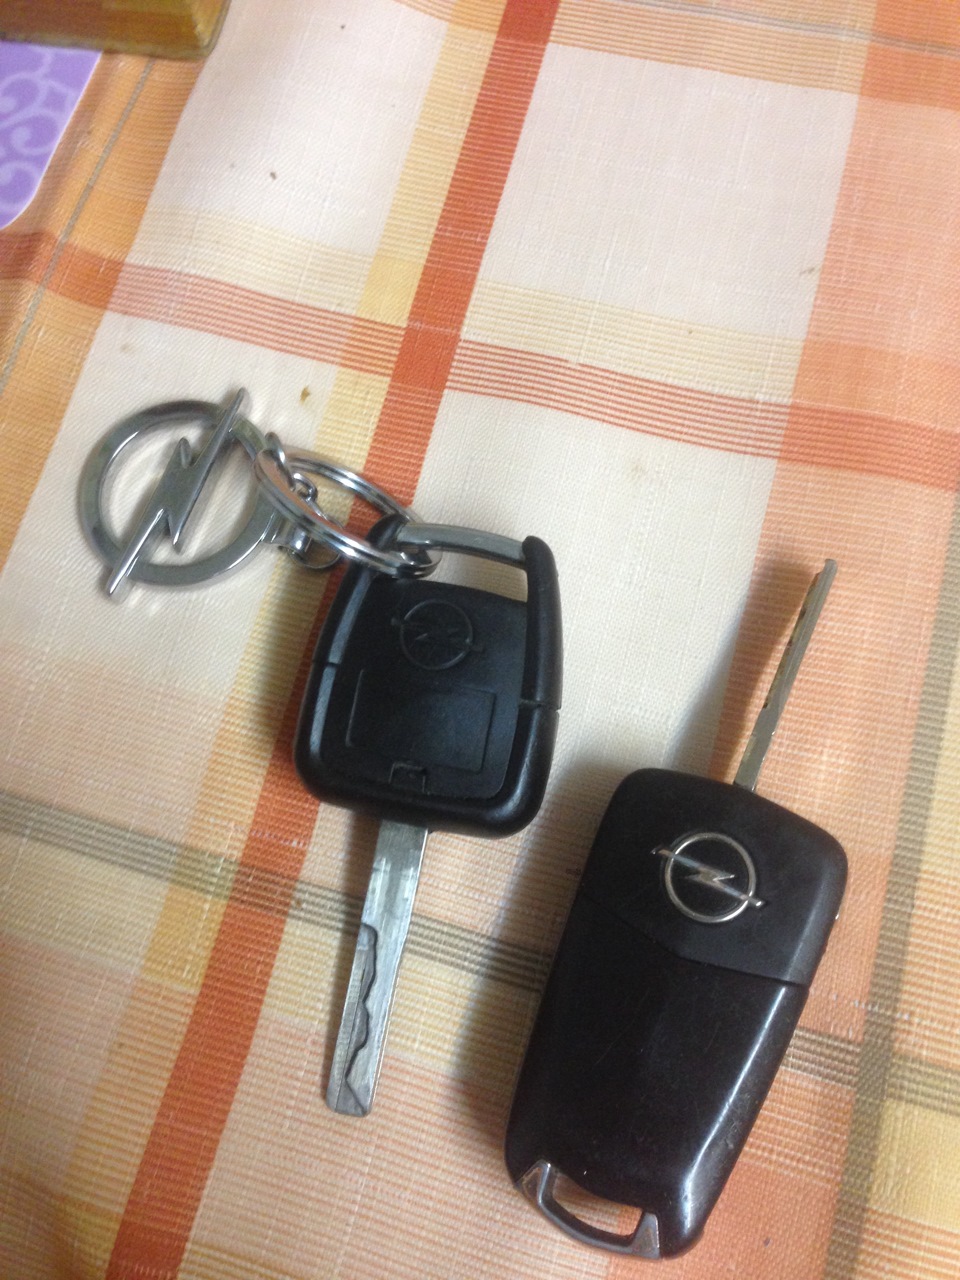 Ключ вектра б. Ключ зажигания Вектра б выкидной. Ключ Опель Вектра с. Ключ Опель Вектра б. Opel Vectra a ключ.